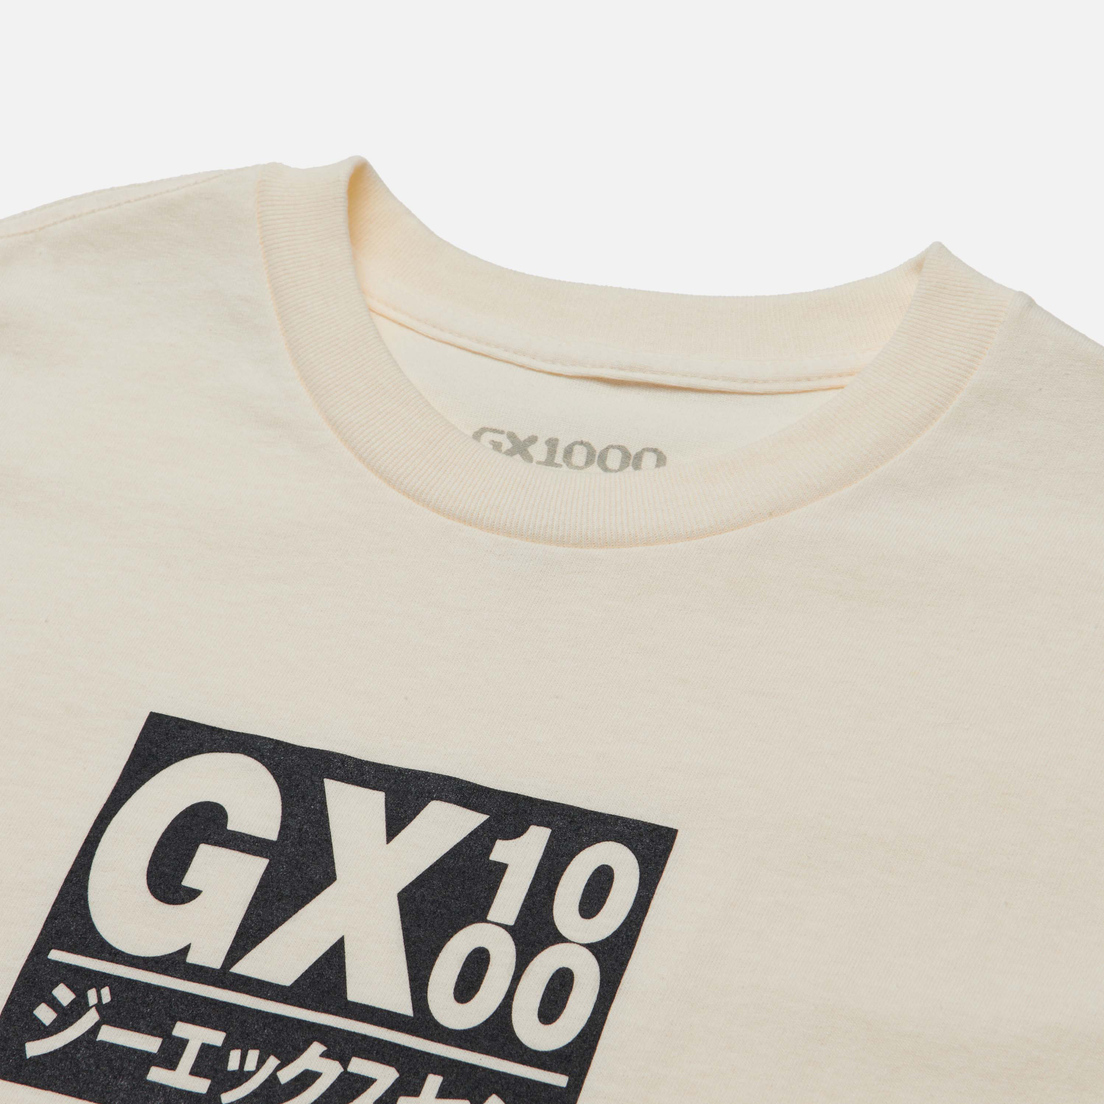 GX1000 Мужская футболка Japan